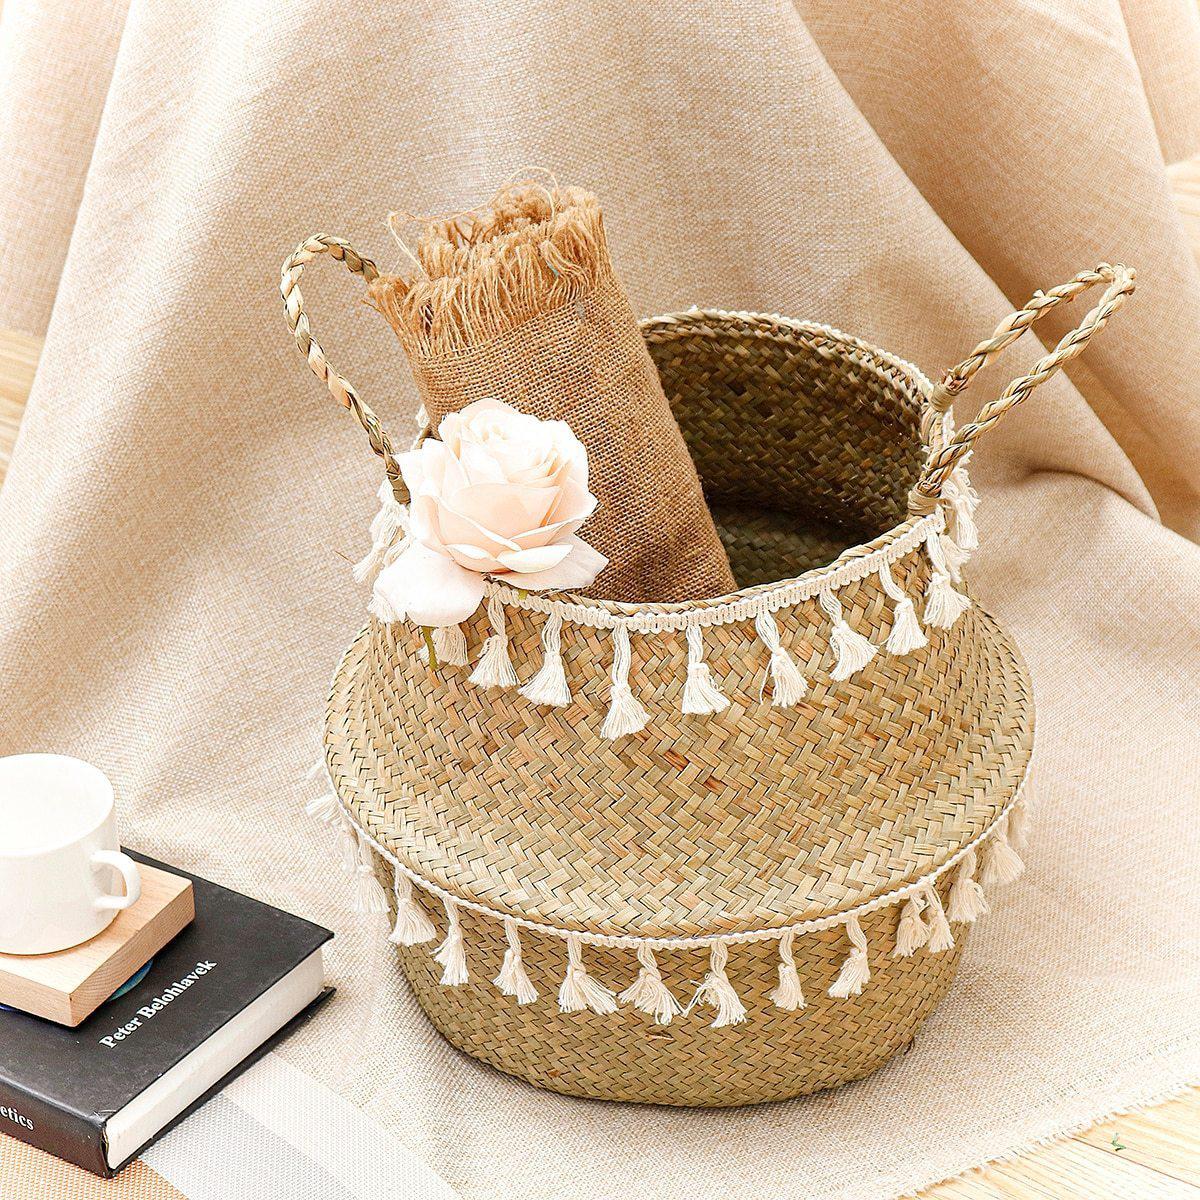 Wicker Basket With Tassels-ChicBohoStyle